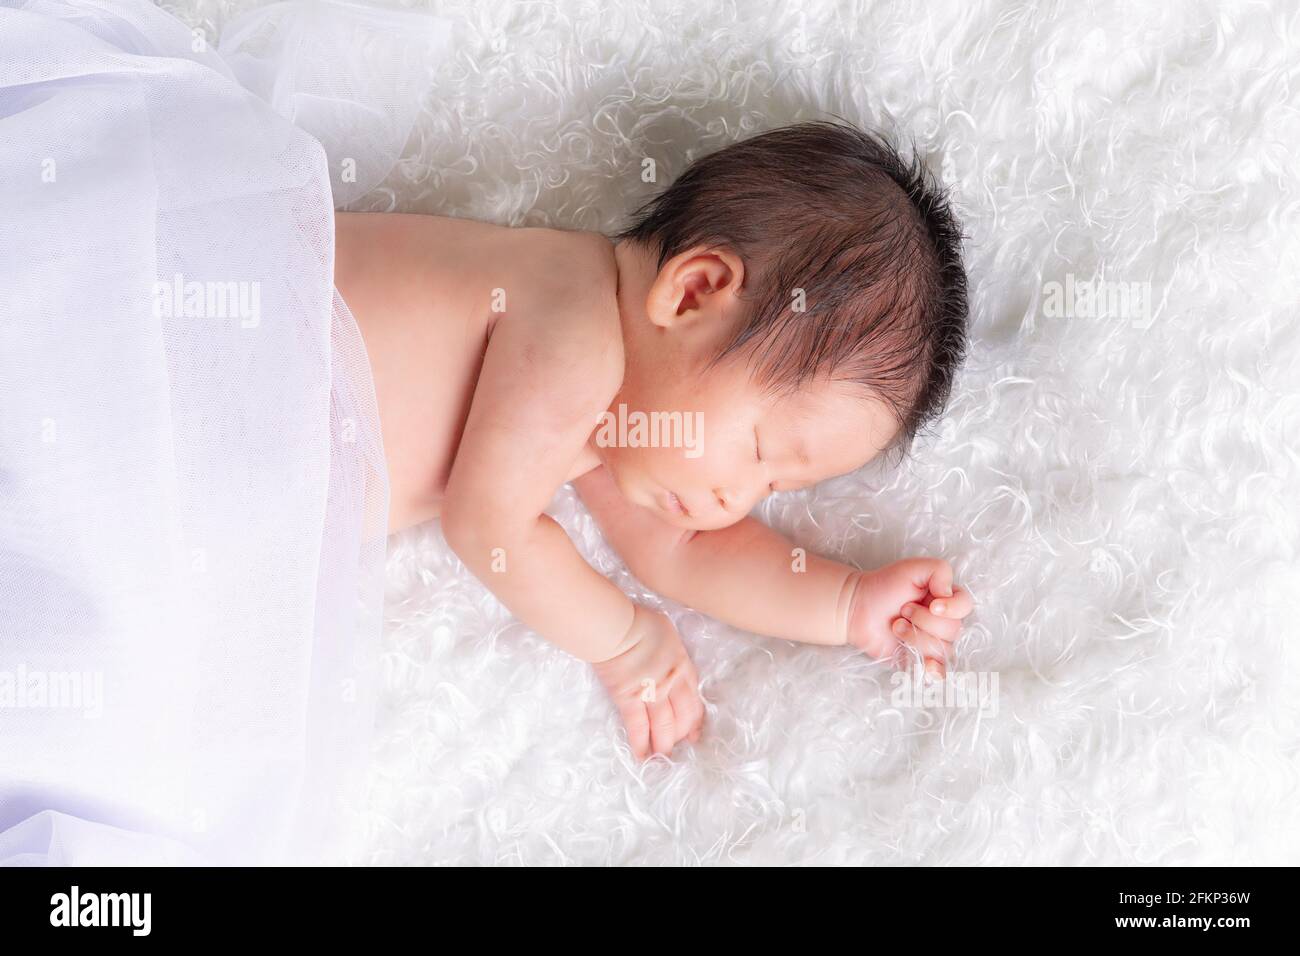 Portrait of a one month old sleeping, newborn baby girl on a white blanket. Concept portrait studio fashion newborn. Stock Photo